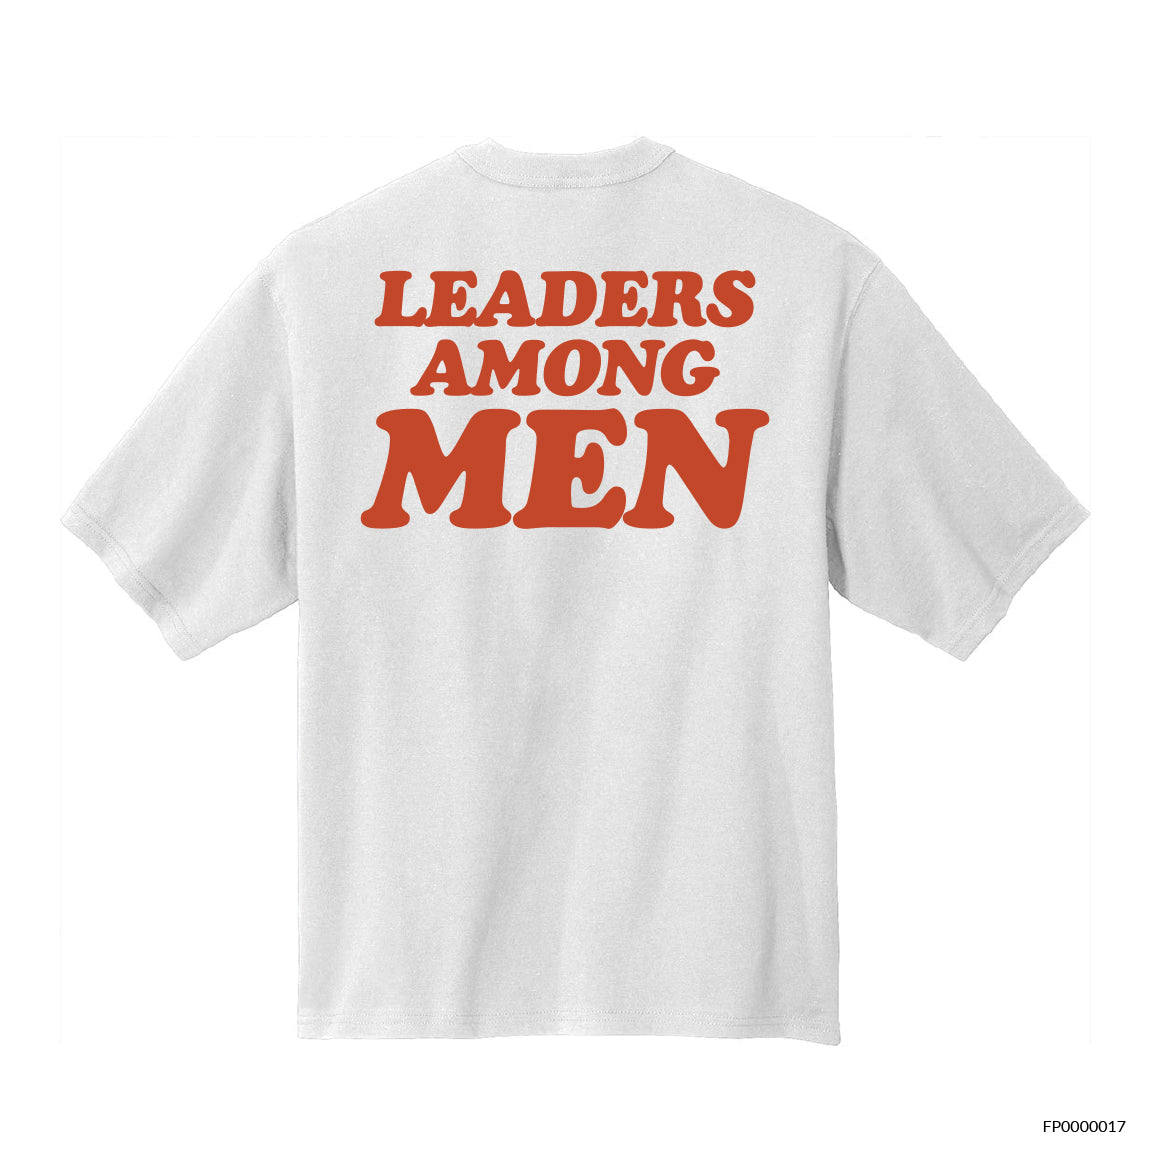 Leaders Among Men